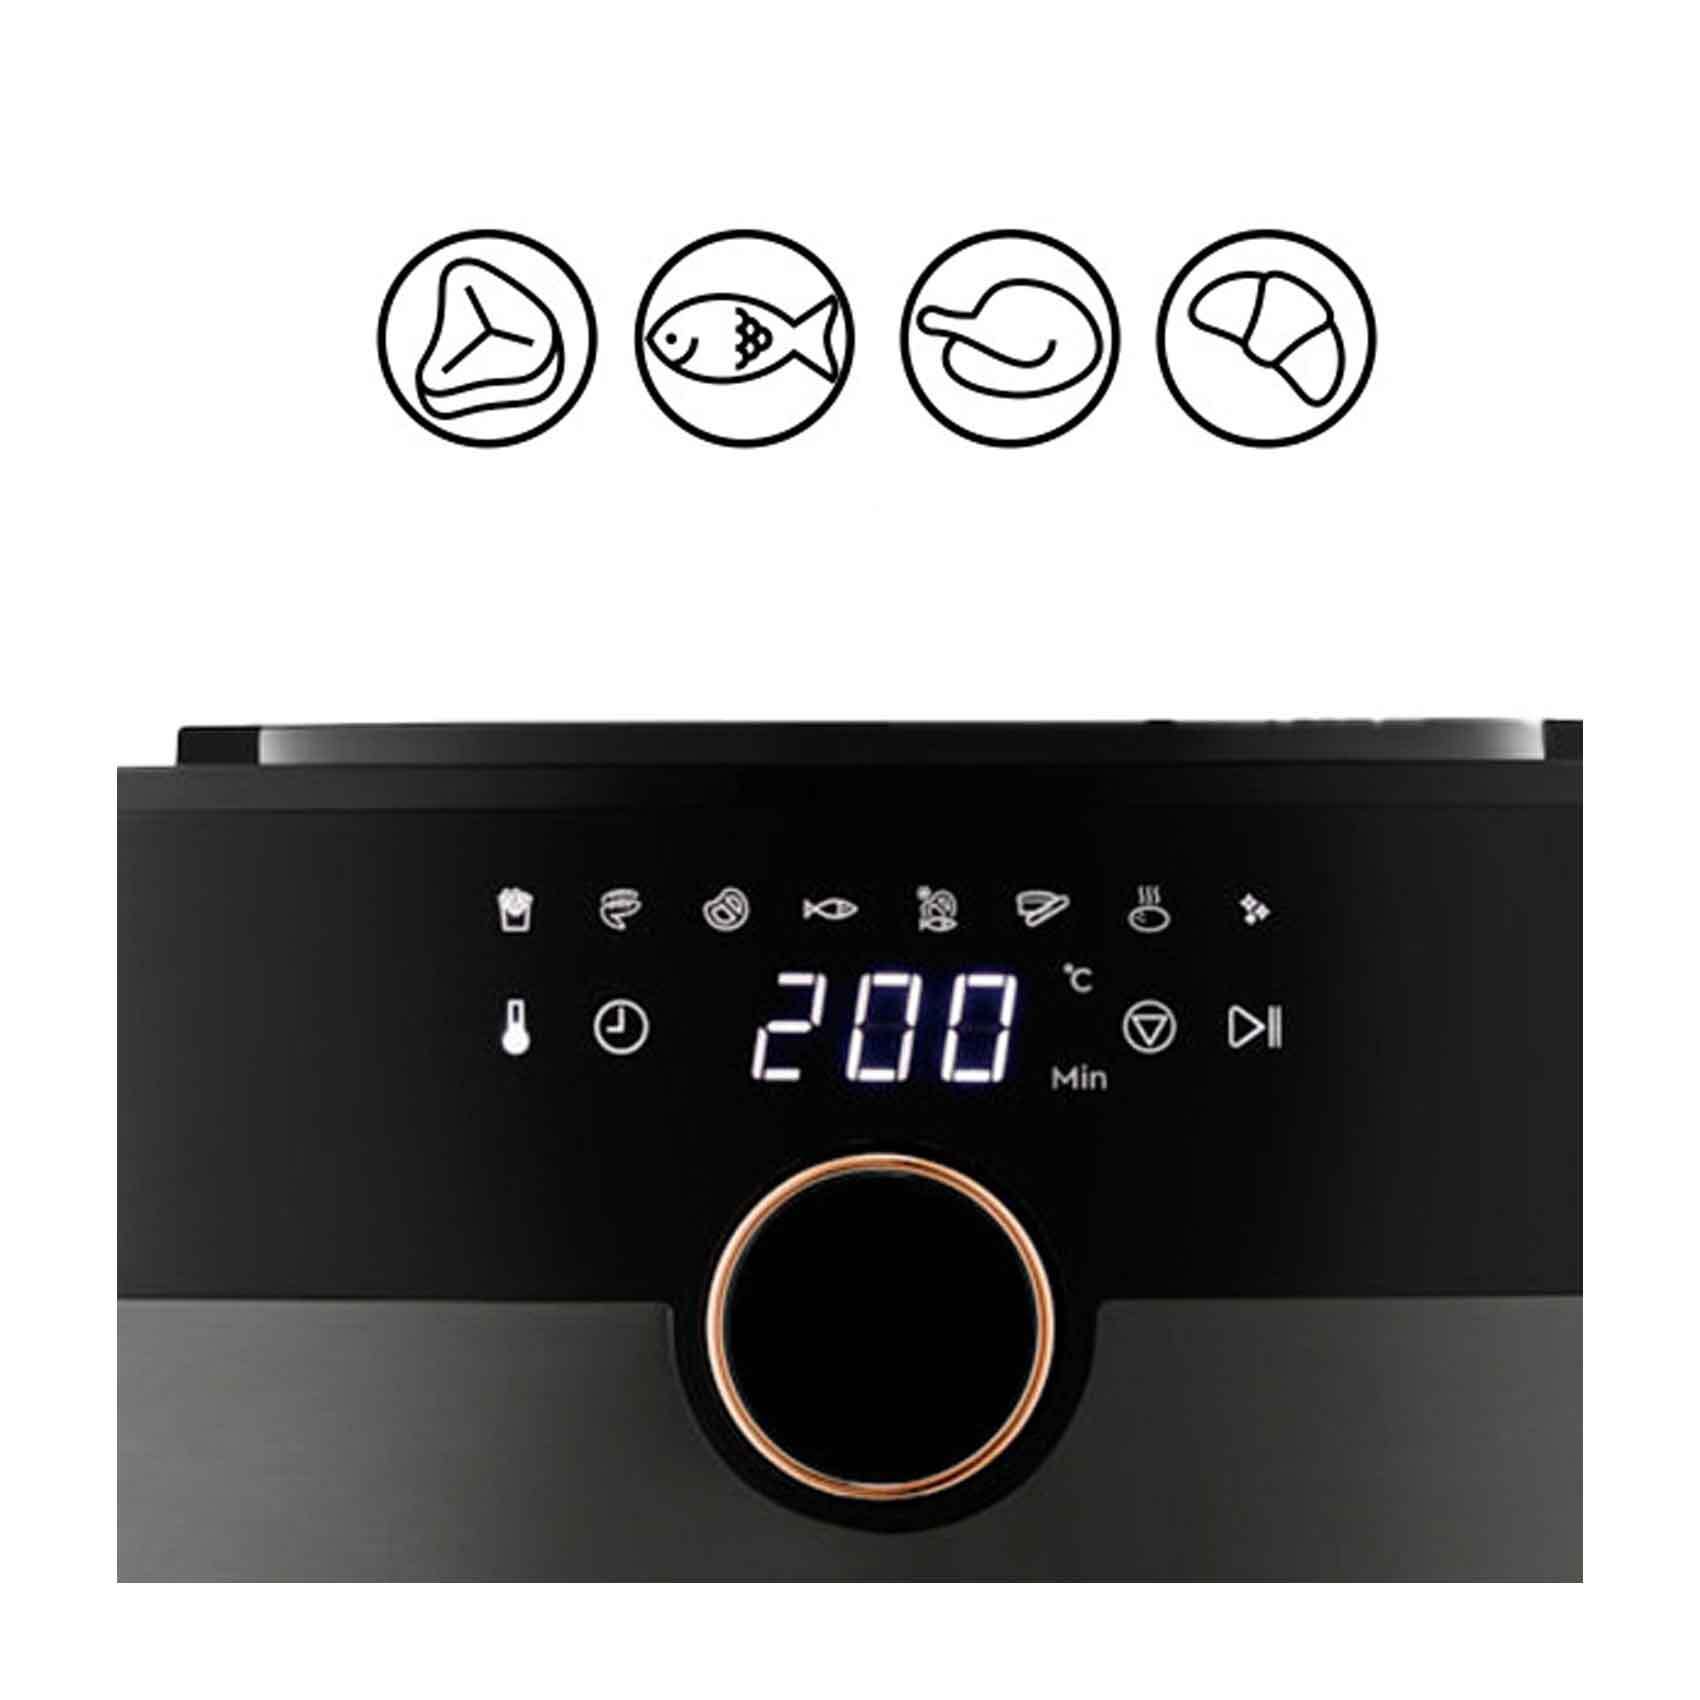 Buy Tefal Air Fryer TFEY701D28 1850 Watt 5.6 Liter Black Online - Shop  Electronics & Appliances on Carrefour Jordan